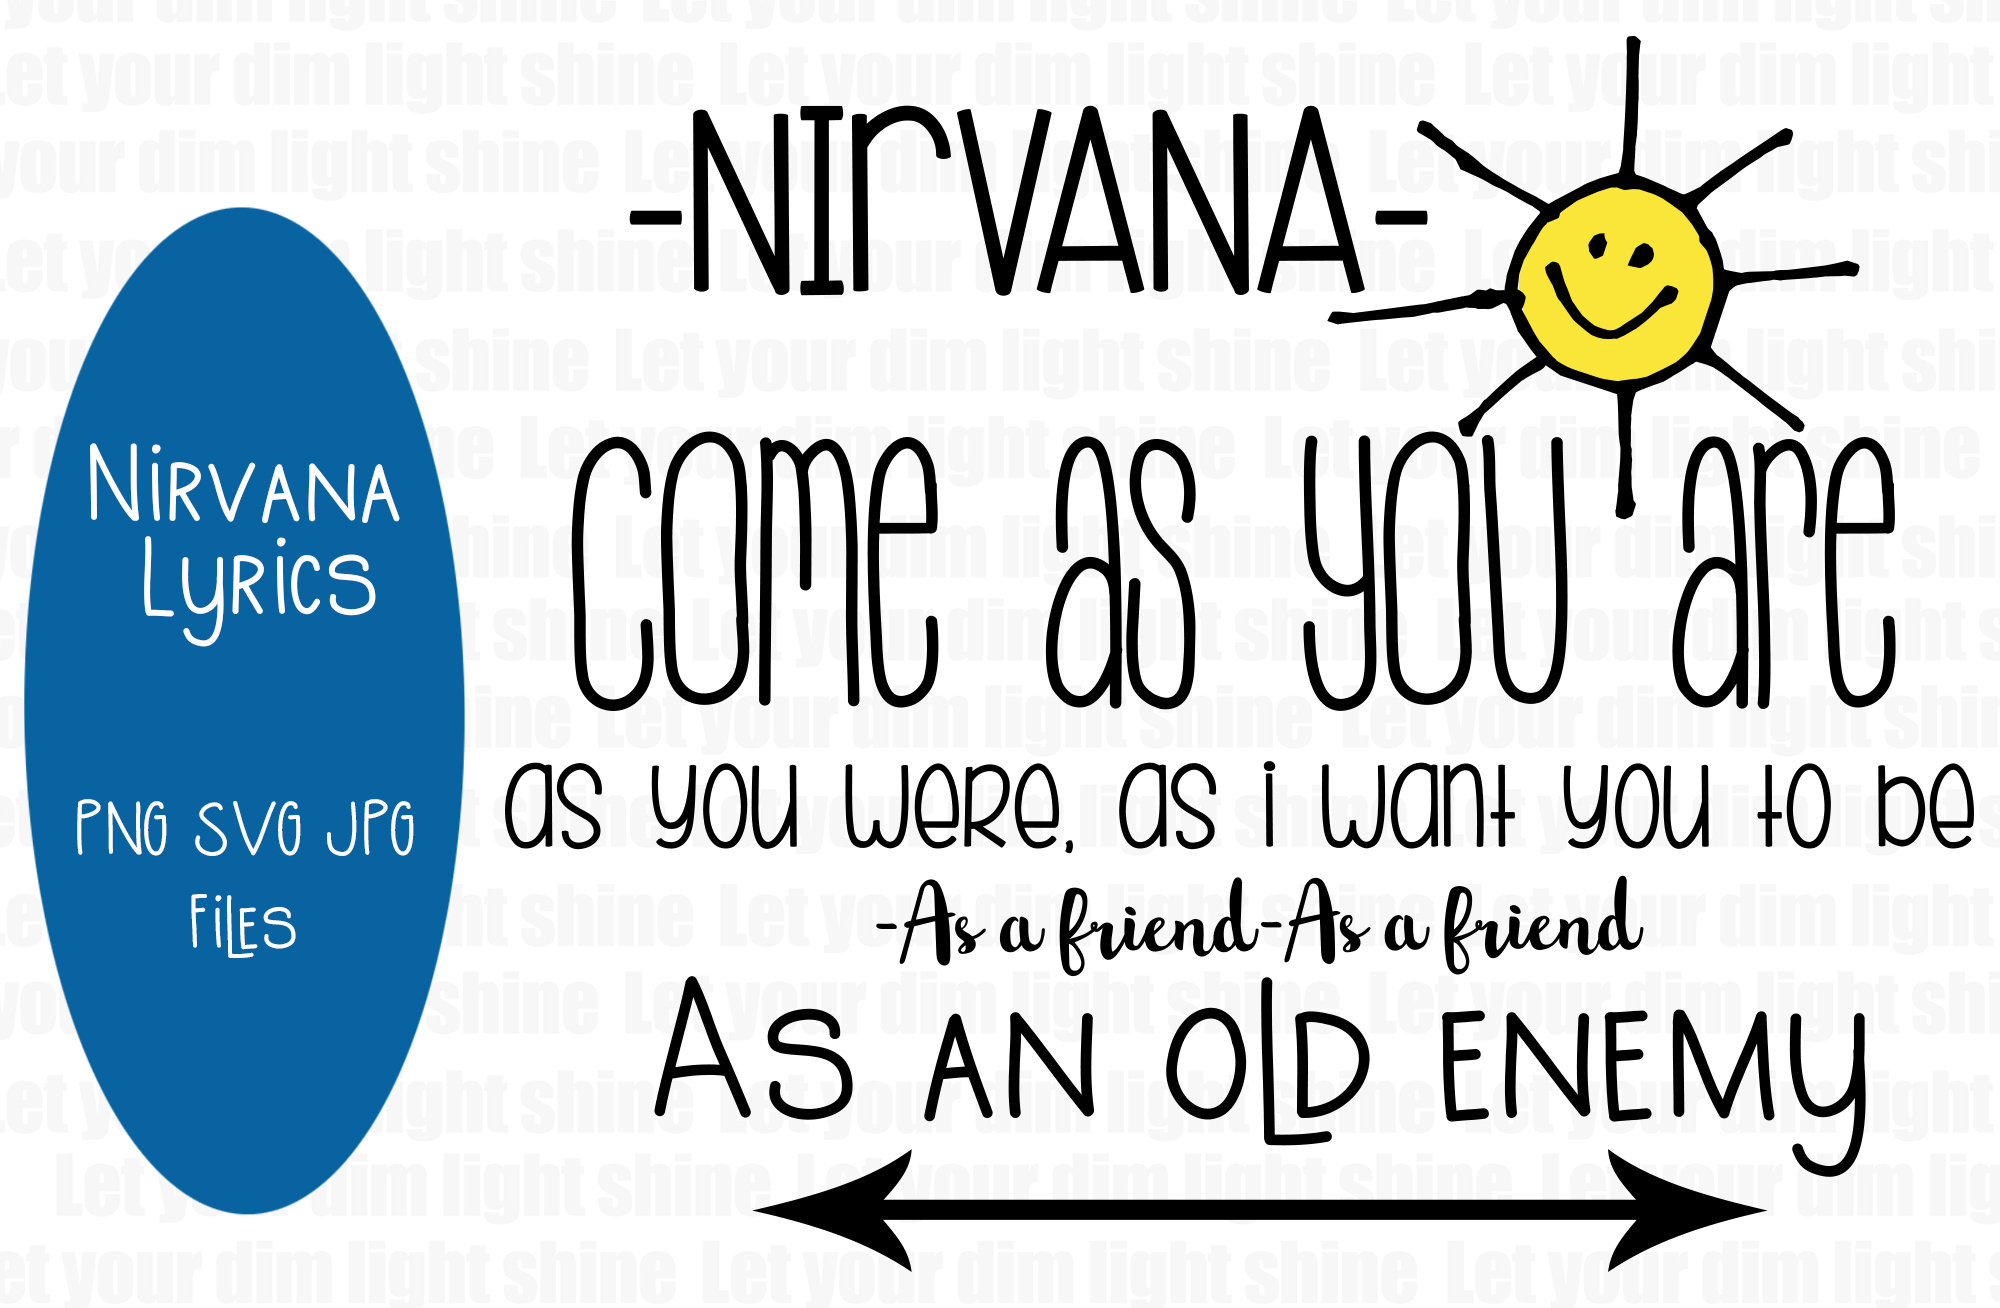 Nirvana come as you are Lyrics. Come as you are Lyrics. Nirvana come as you are. Come as you are. Nirvana lyrics